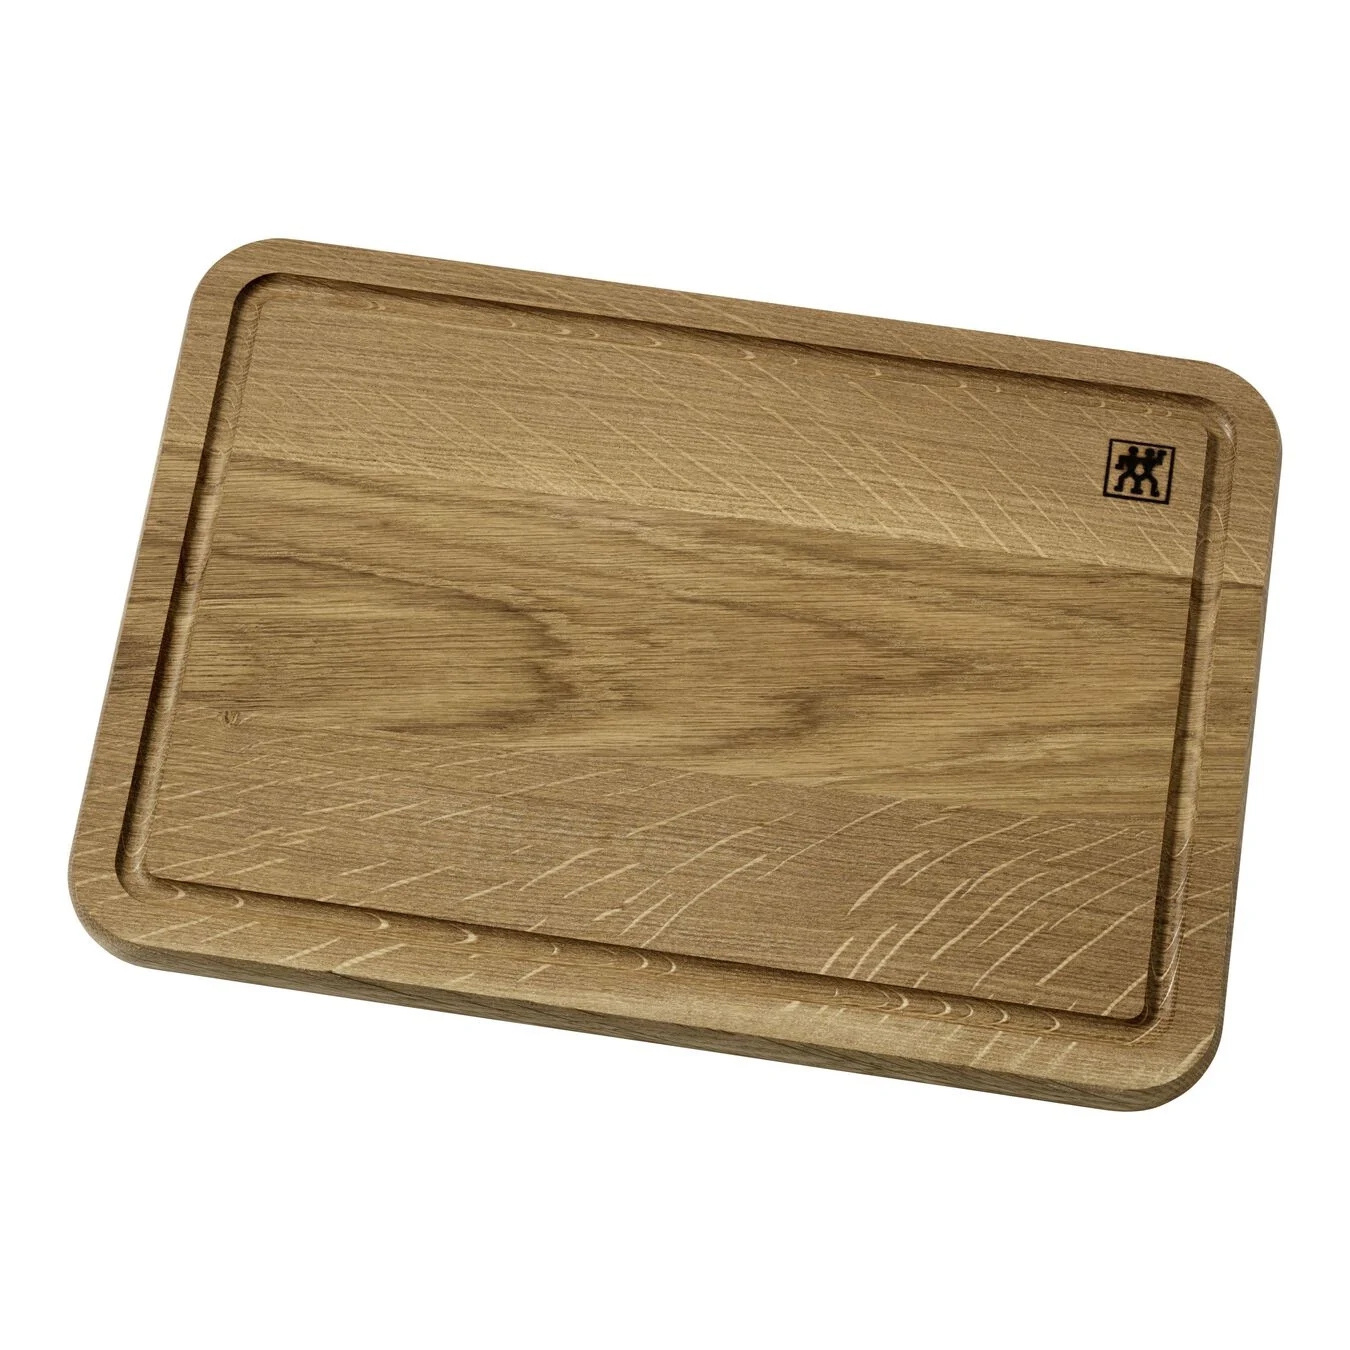 Zwilling - Cutting board 35 cm x 25 cm, oak